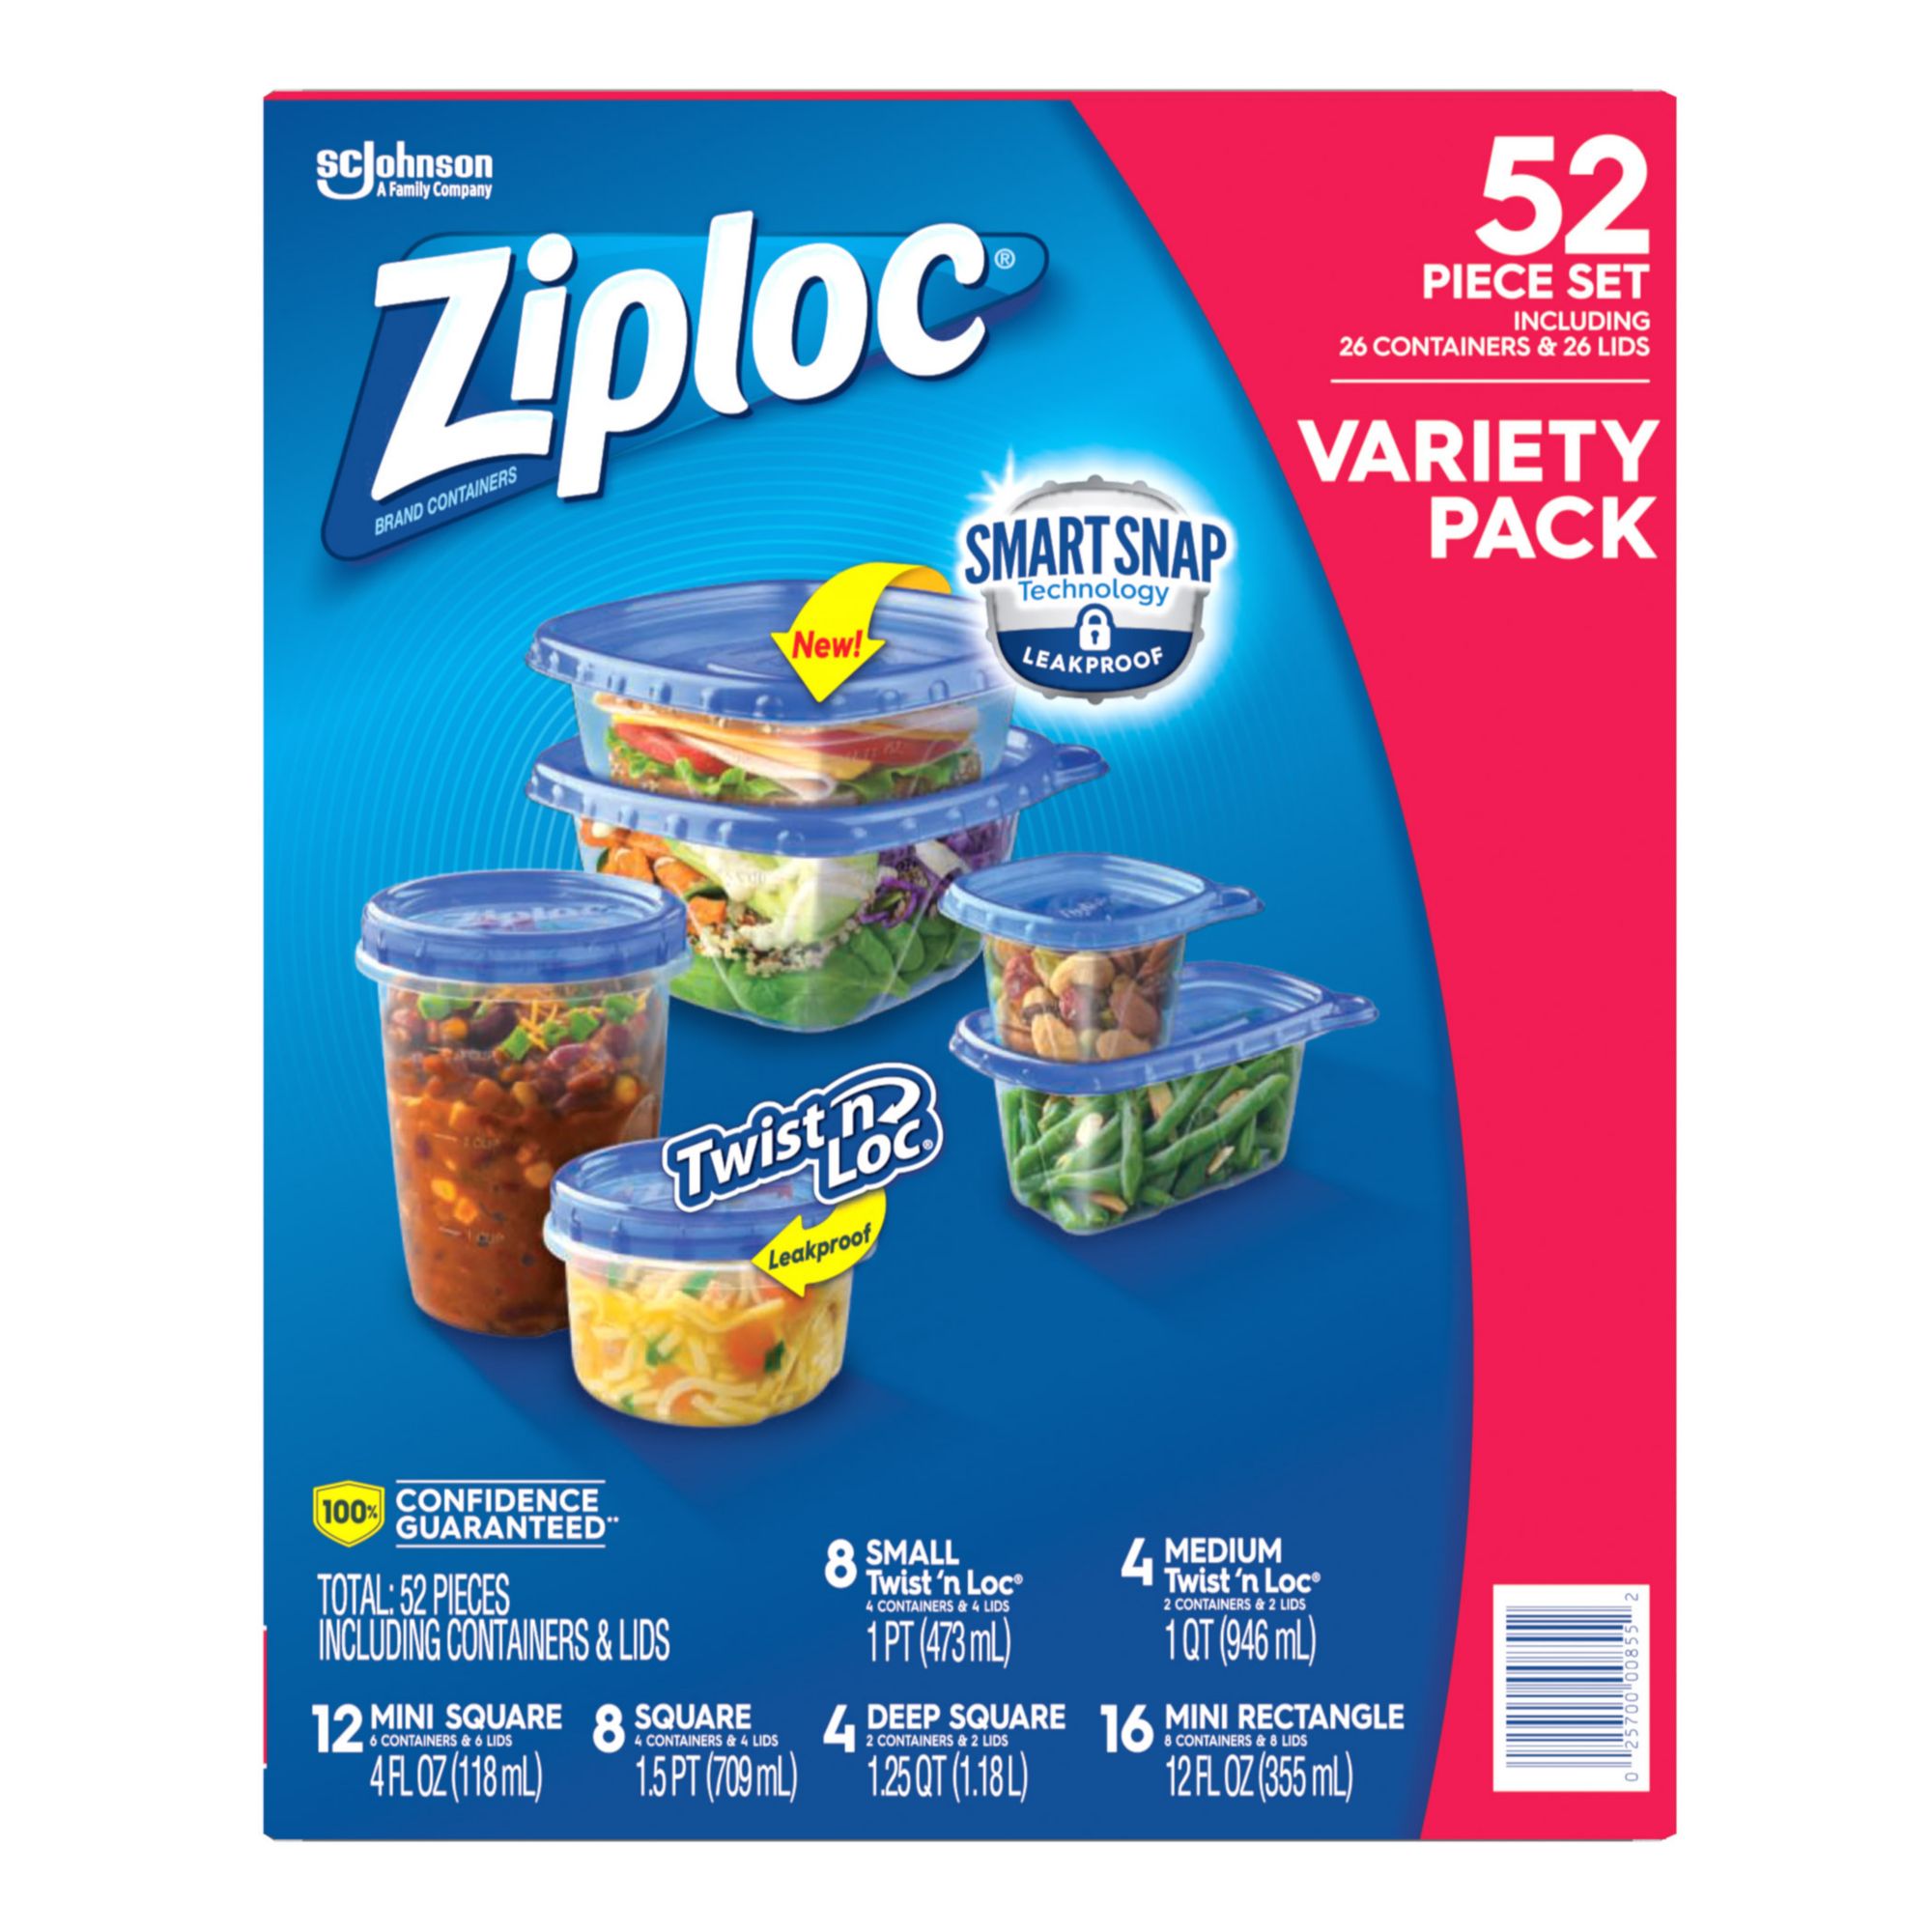 Ziploc 7 Piece Plastic Food Storage Container Set Clear - Office Depot